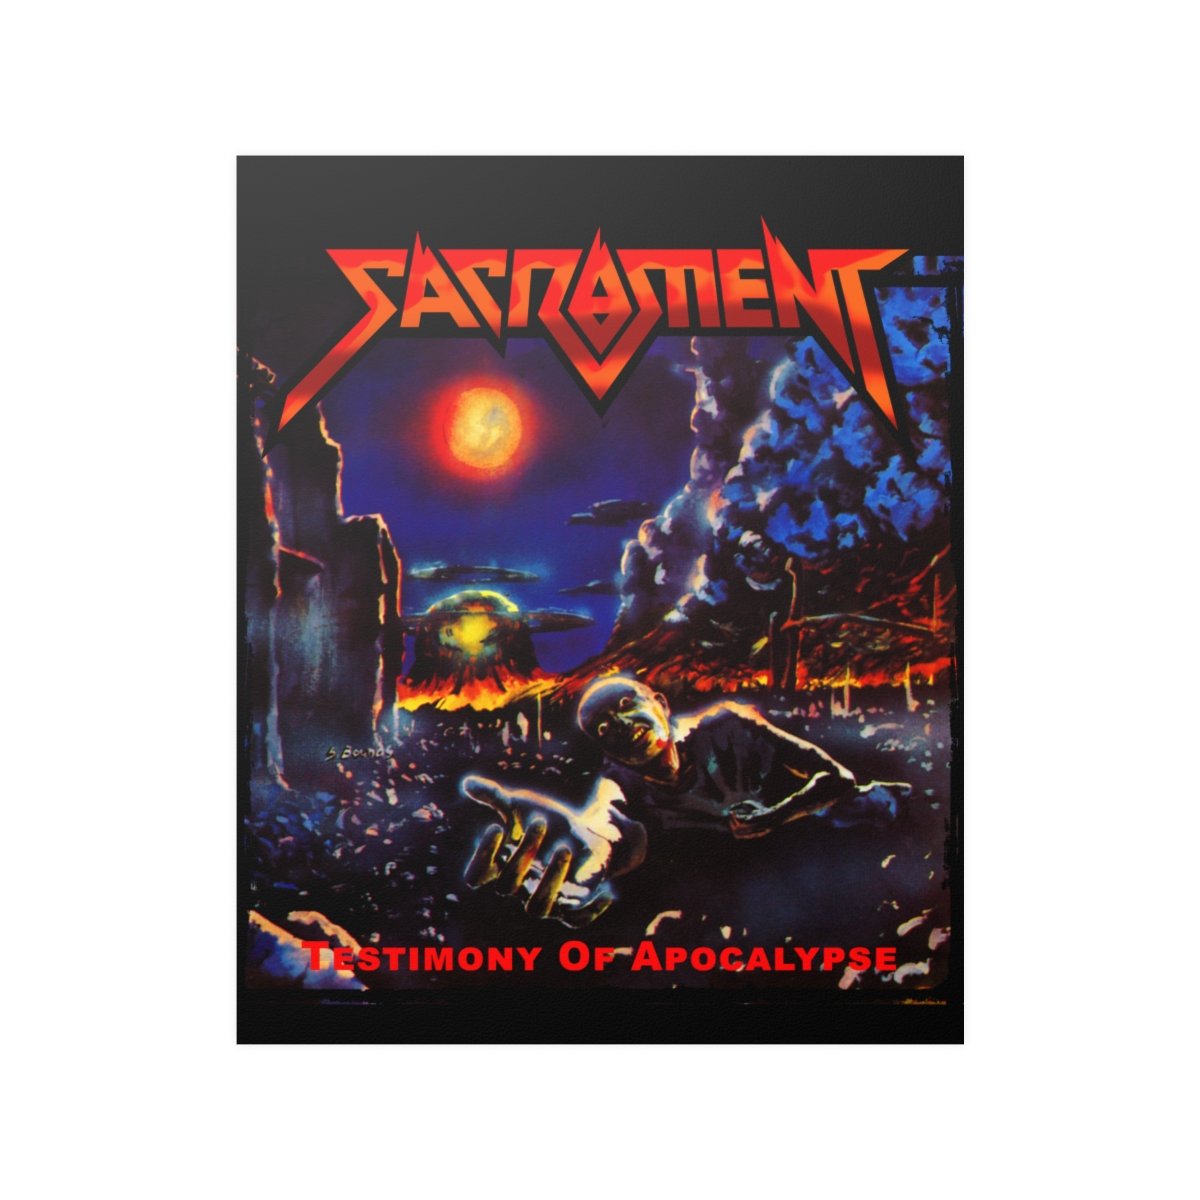 Sacrament – Testimony of Apocalypse Posters